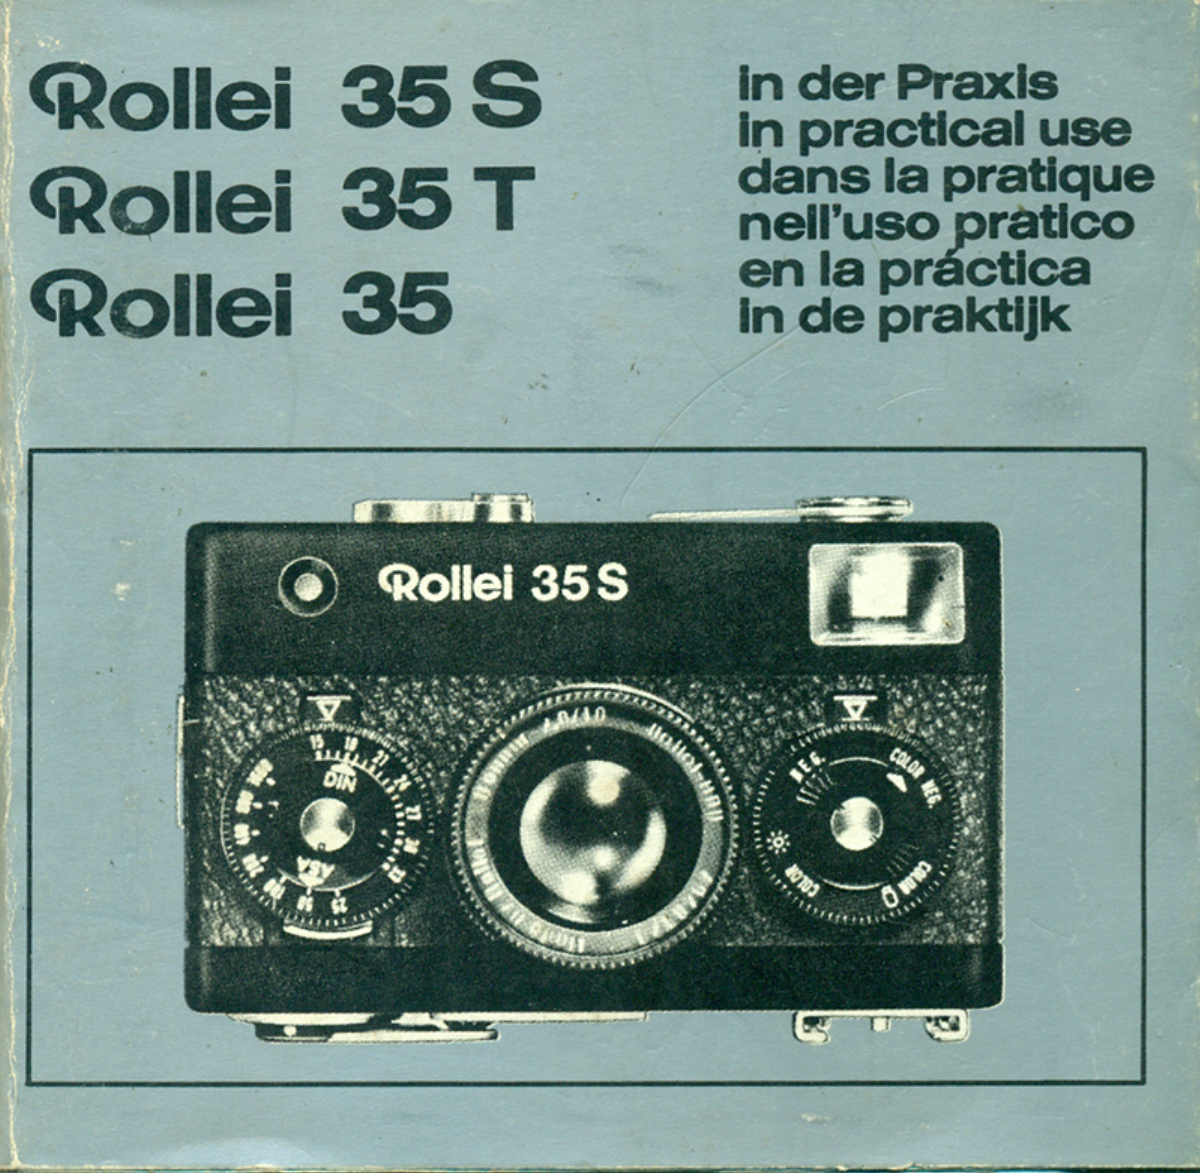 Rollei 35, 35T, 35s, 35 T, 35 S User manual | Manualzz